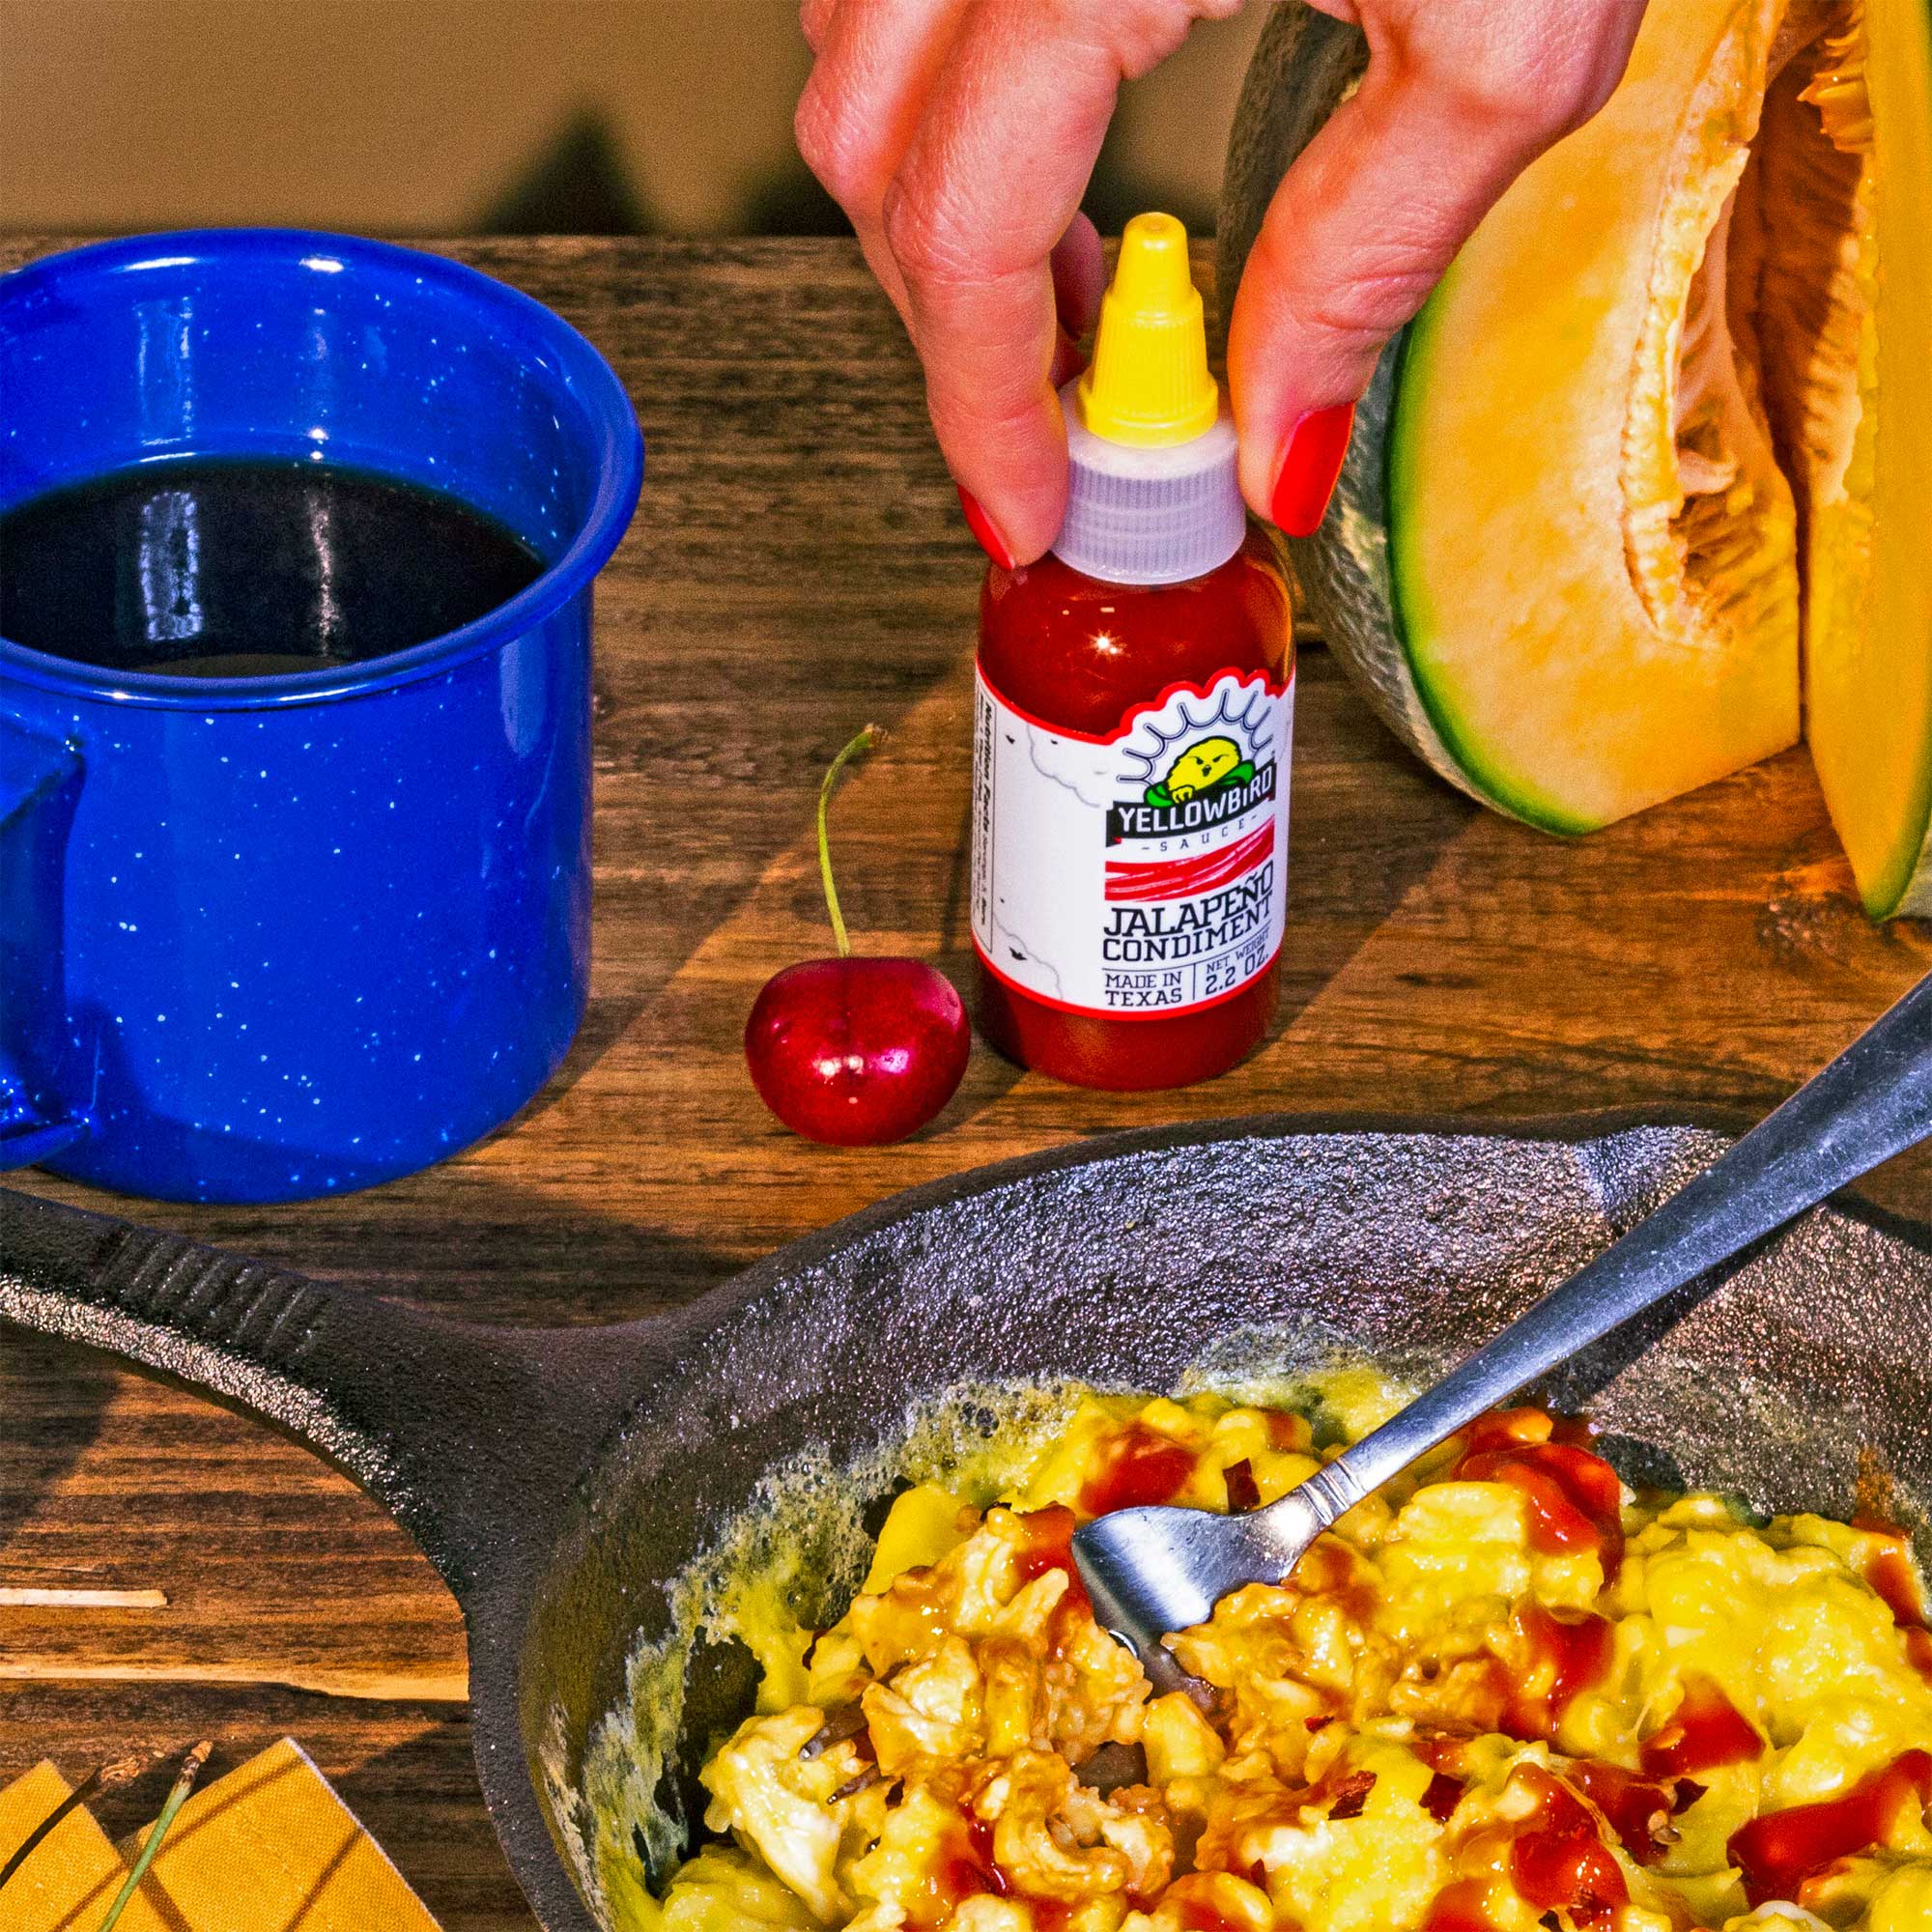 Yellowbird Classic Jalapeño Hot Sauce on scrambled eggs at a camping table